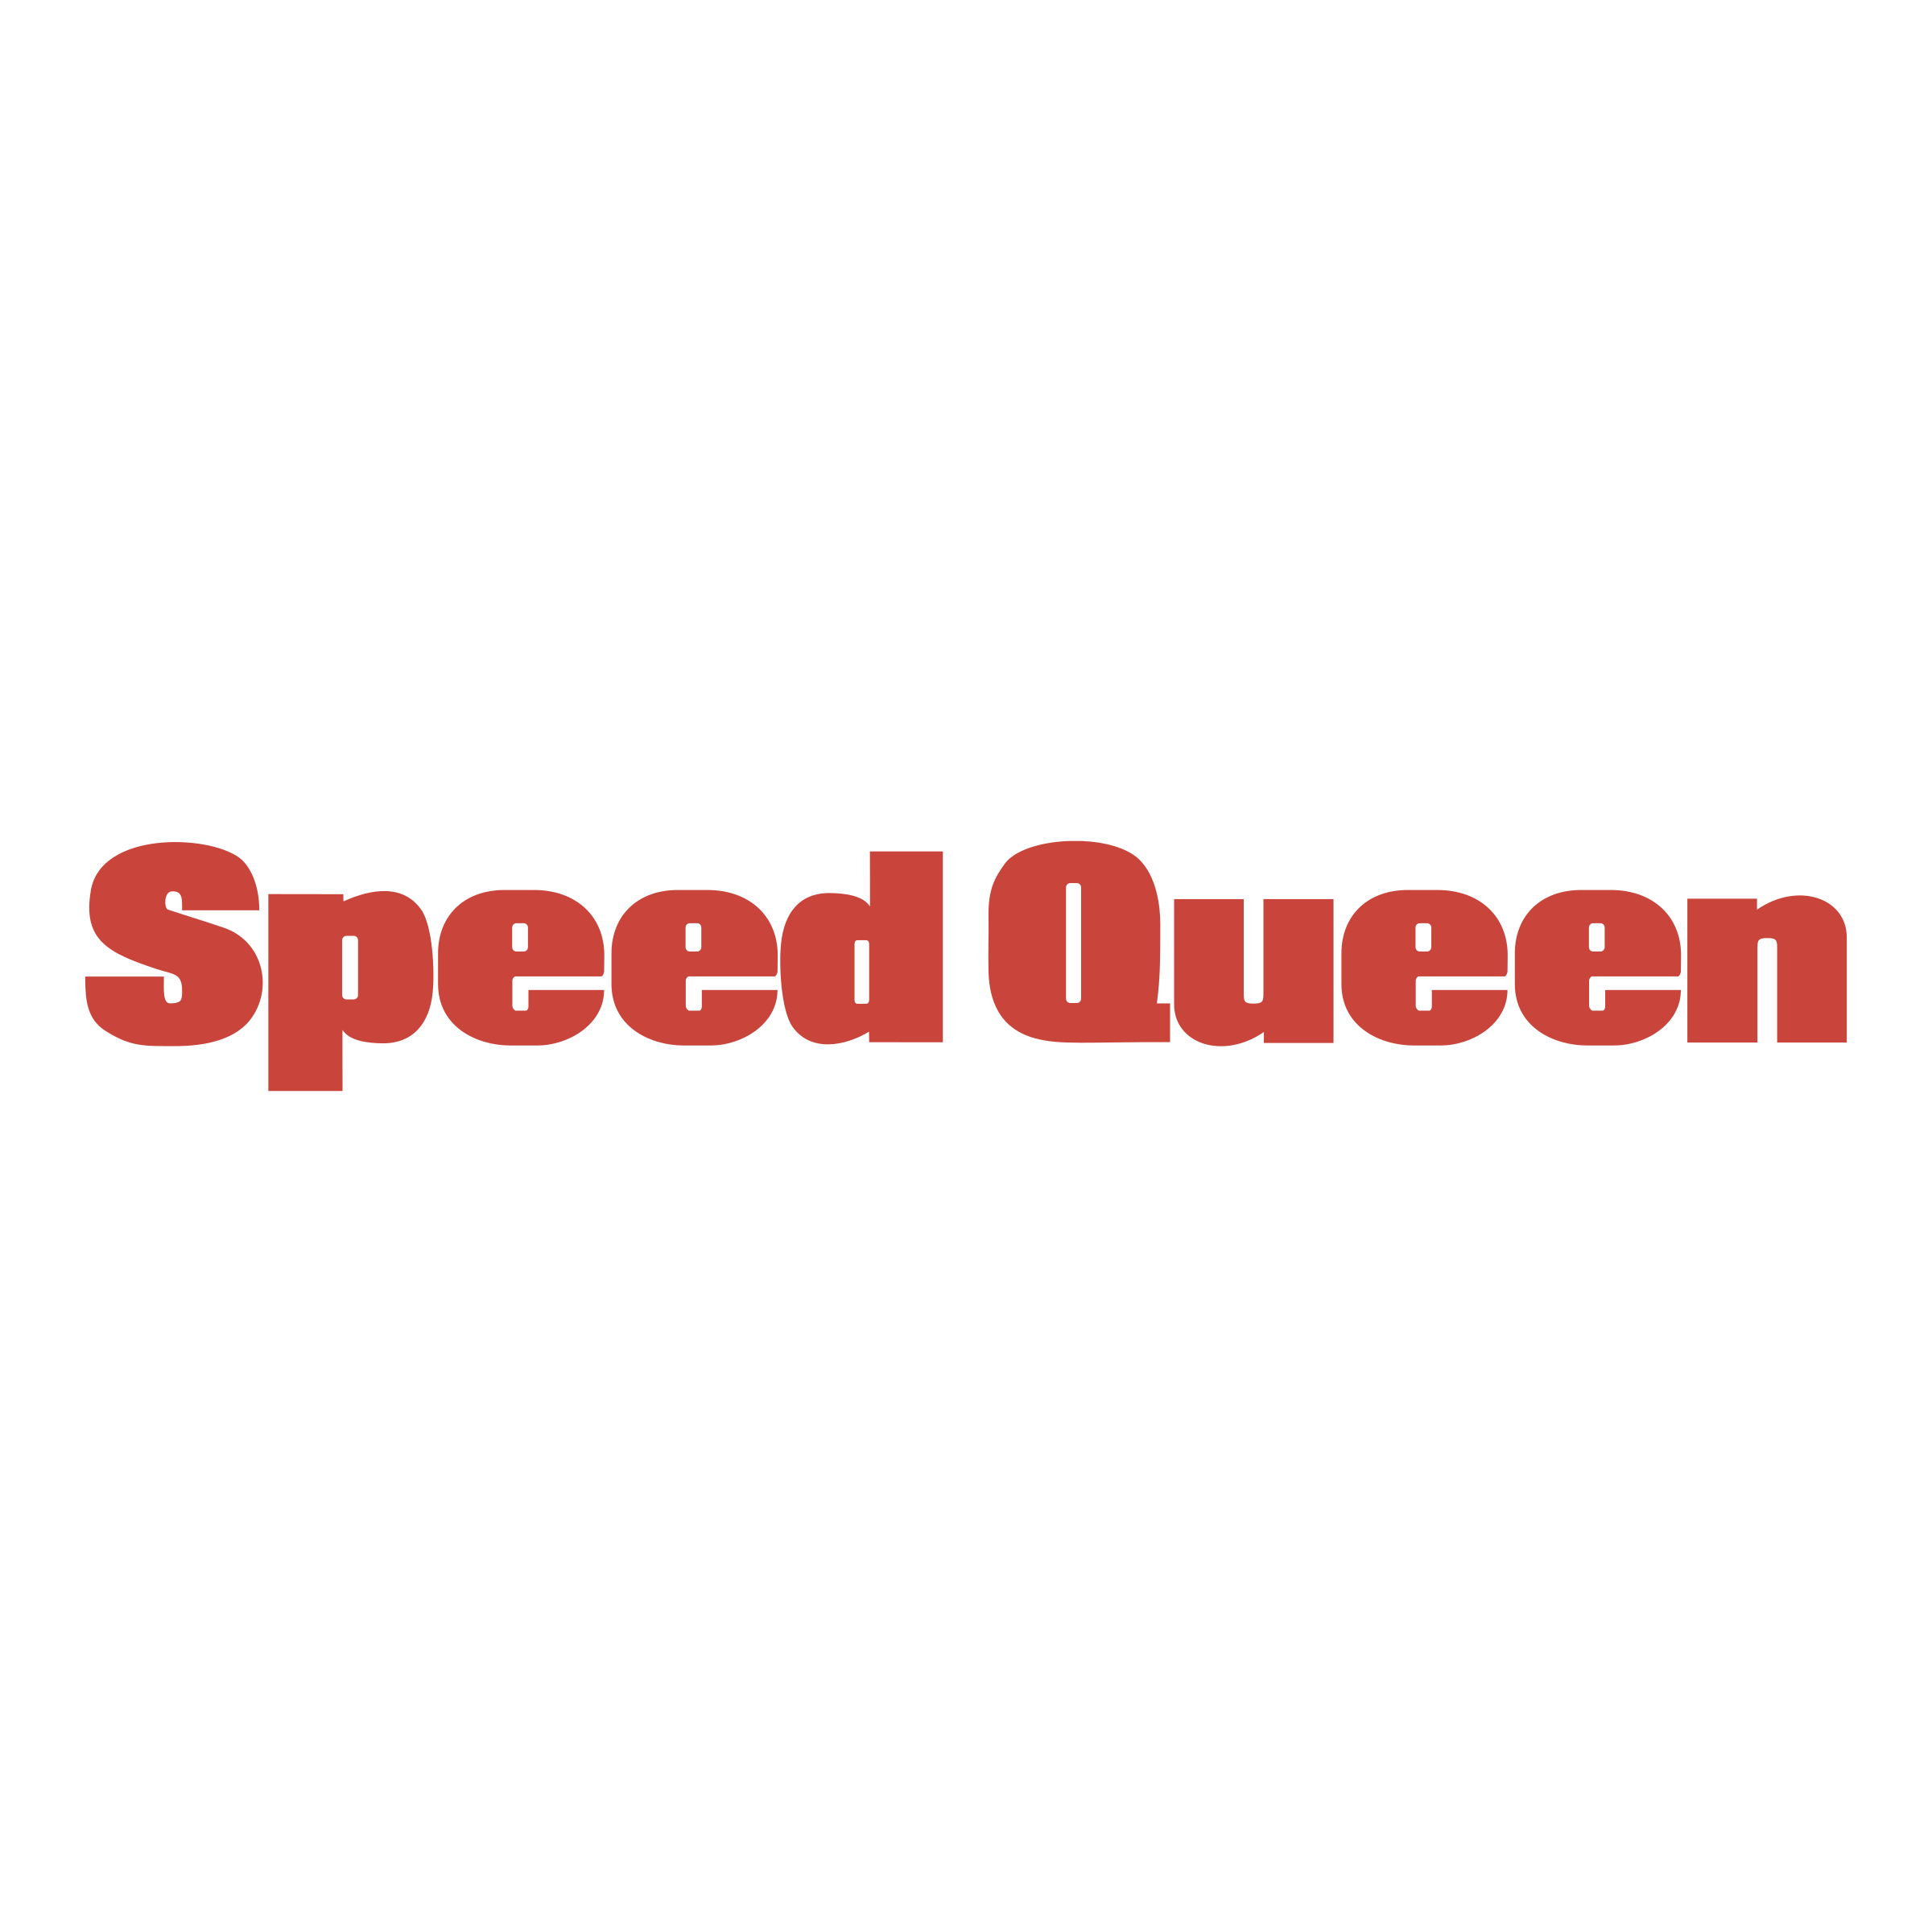 Speed Queen Logo - speed-queen-logo-png-transparent | T&L Equipment Company ...